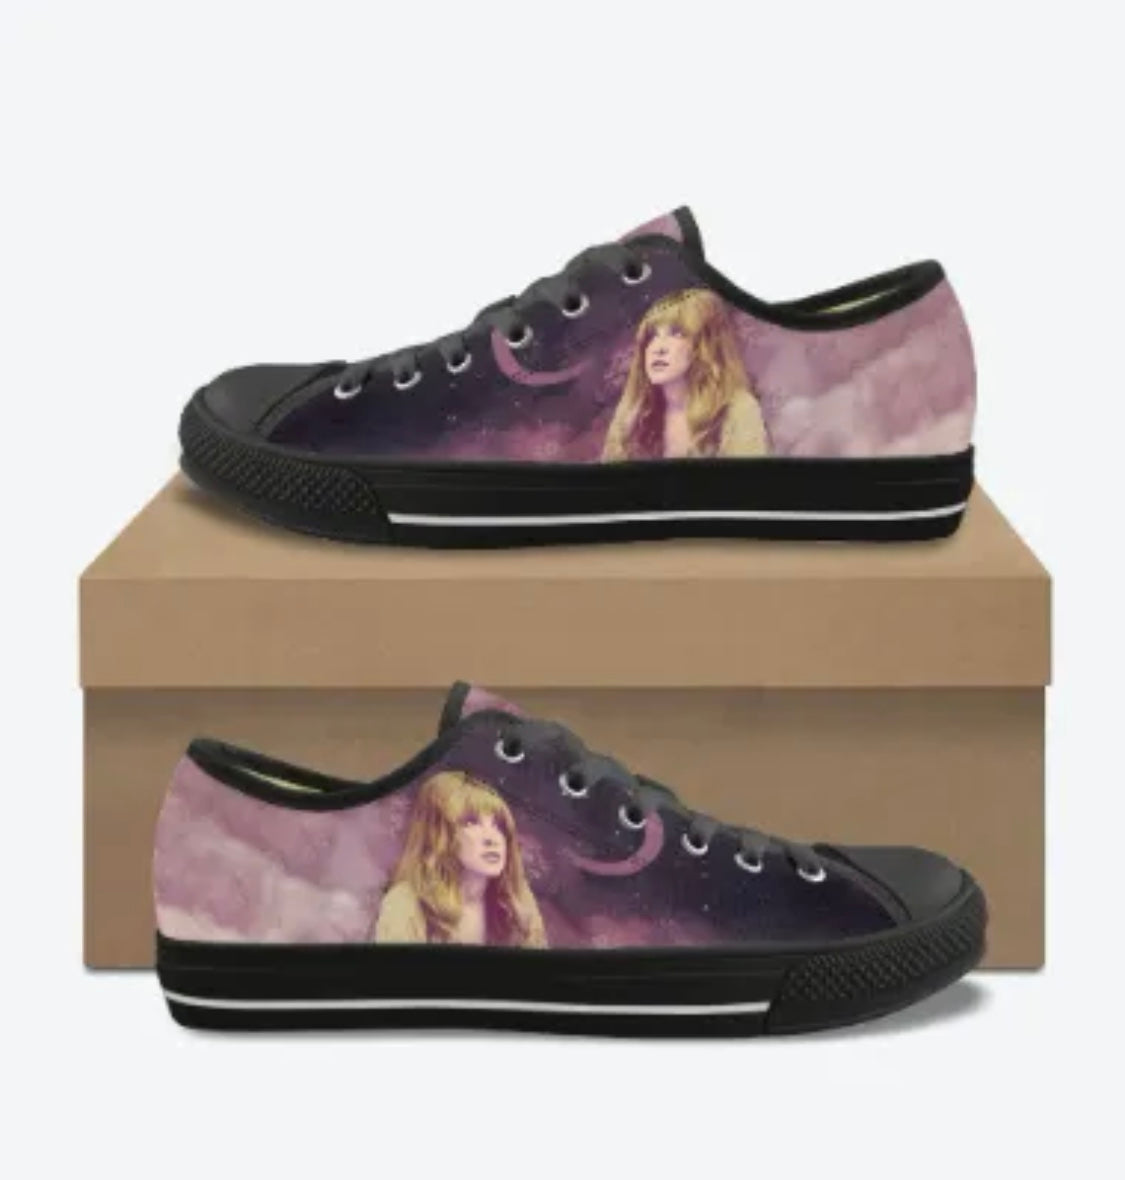 Stevie Nicks shoes